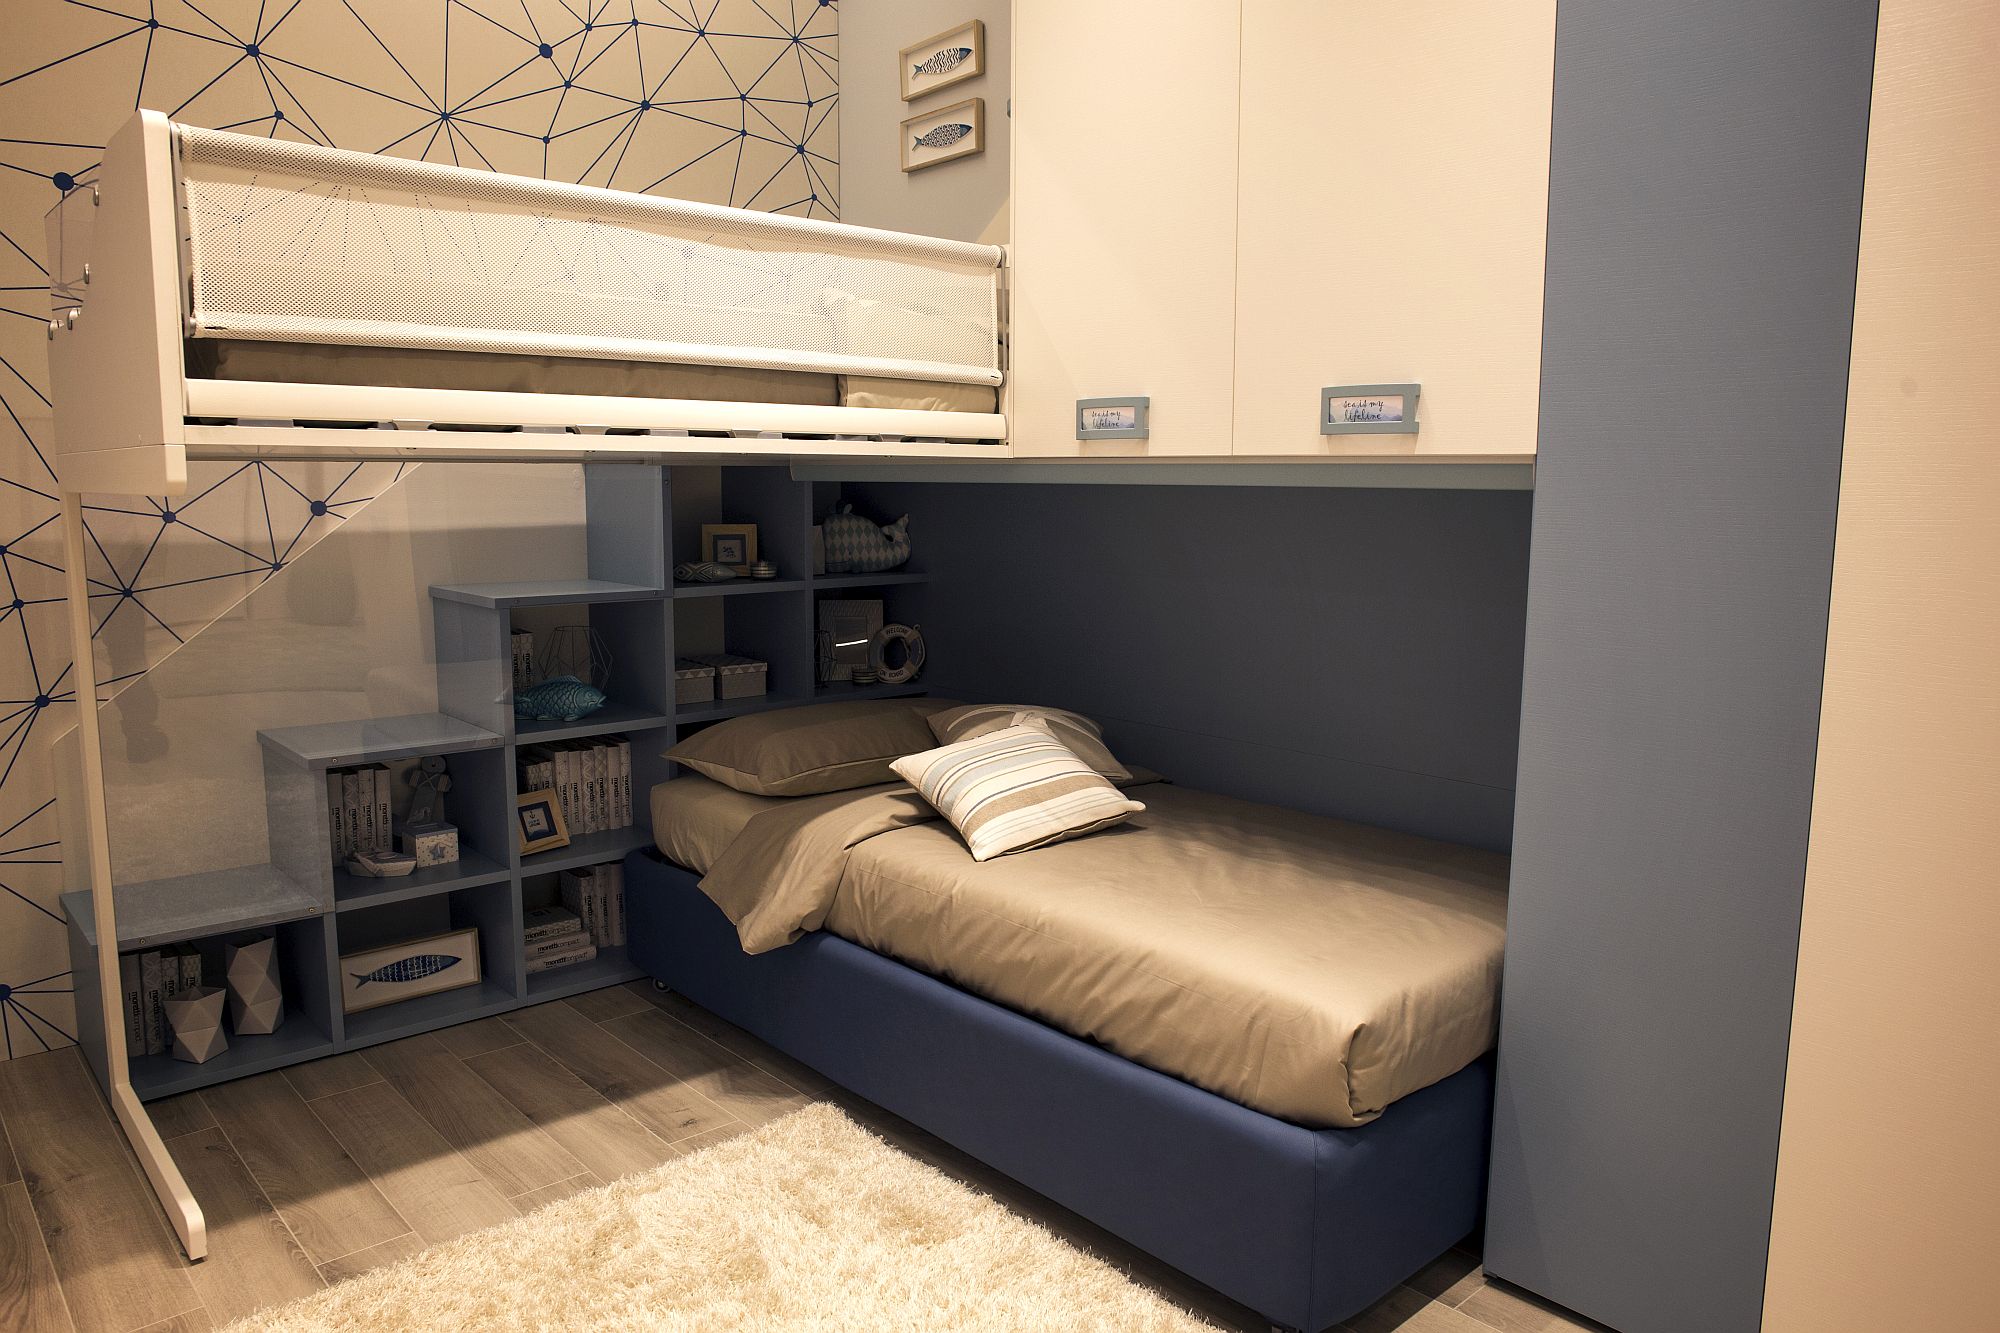 corner space kids storage built maximize bedrooms bedroom bed bunk ways idea saves options than